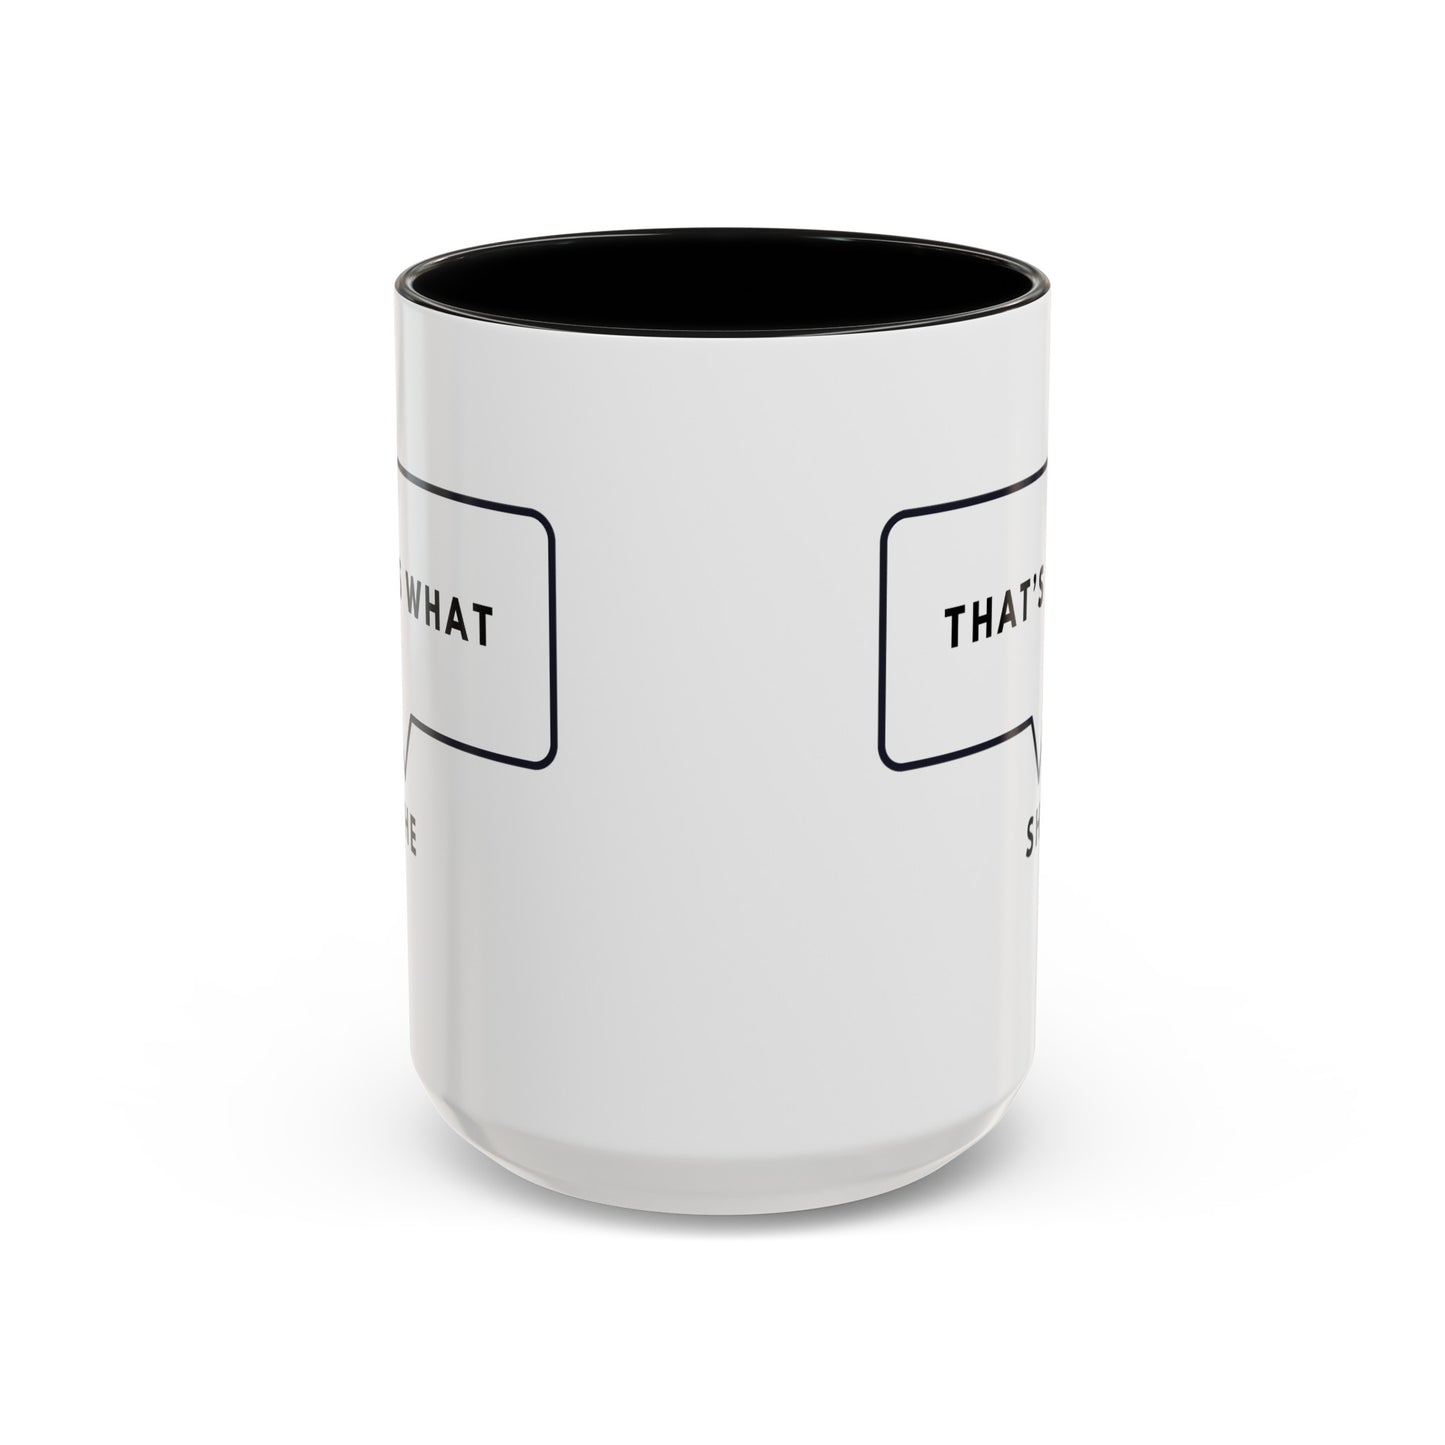 That's What She Said  - The Office Coffee Mug (11, 15oz)